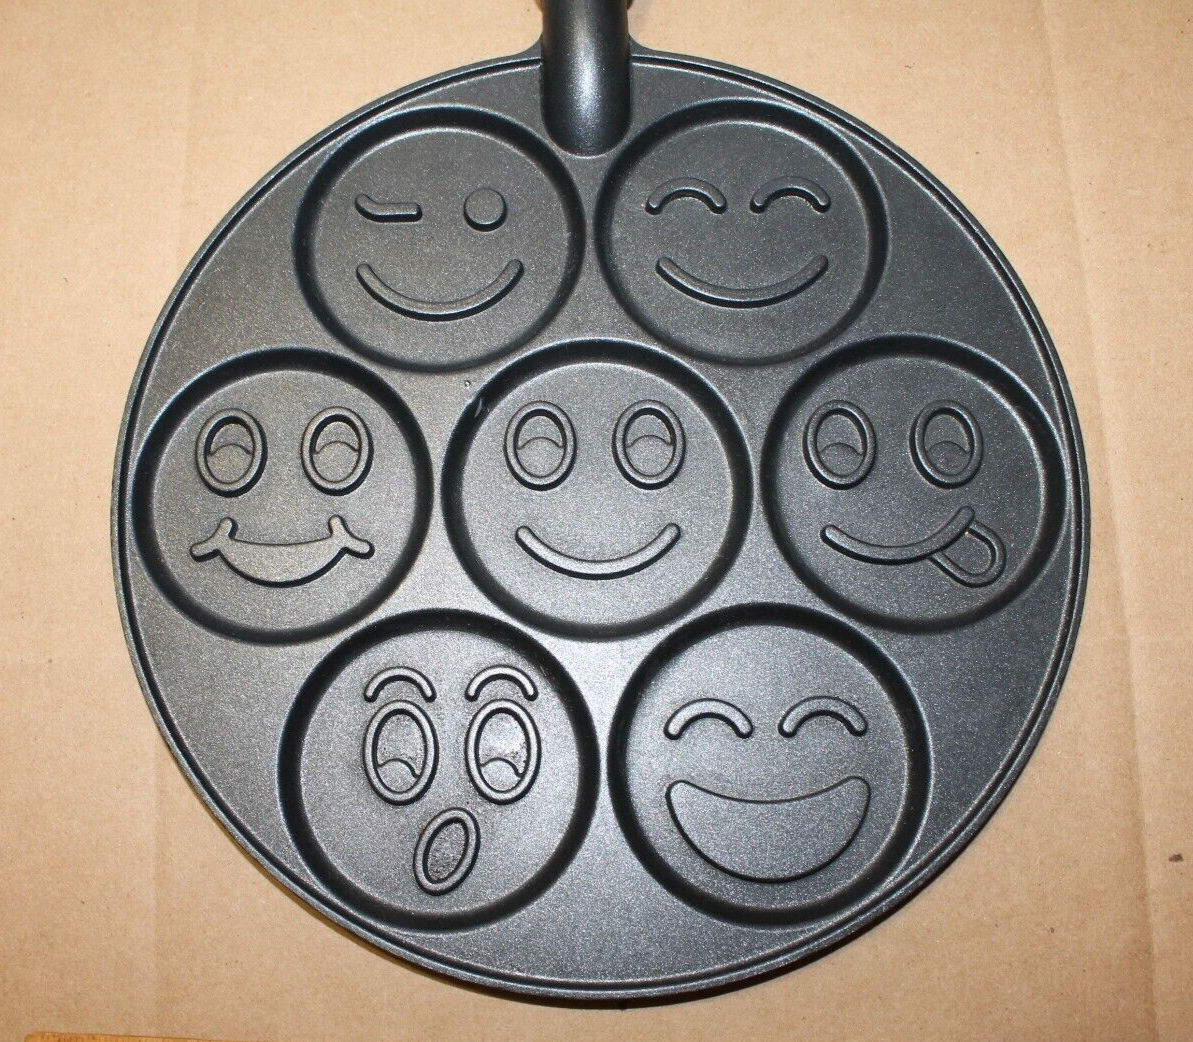 Primary image for Emoji Smiley Face Pancake Pan Nordic Non-Stick Coating Breakfast Pan Cakes USA